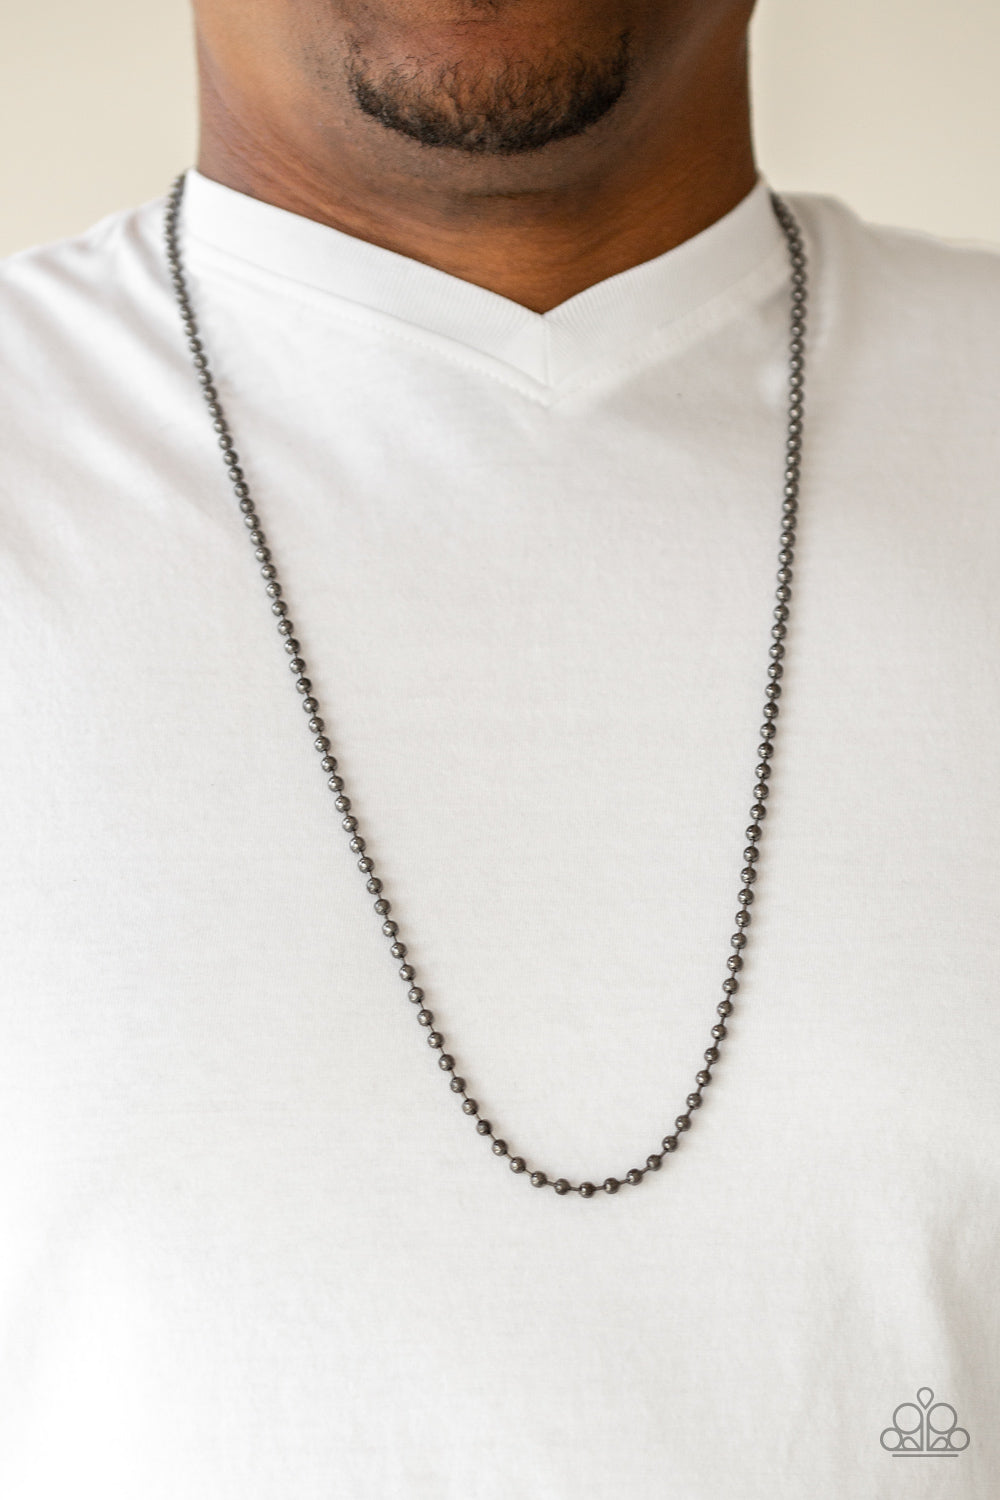 Paparazzi Accessories - Cadet Casual - Black Necklace